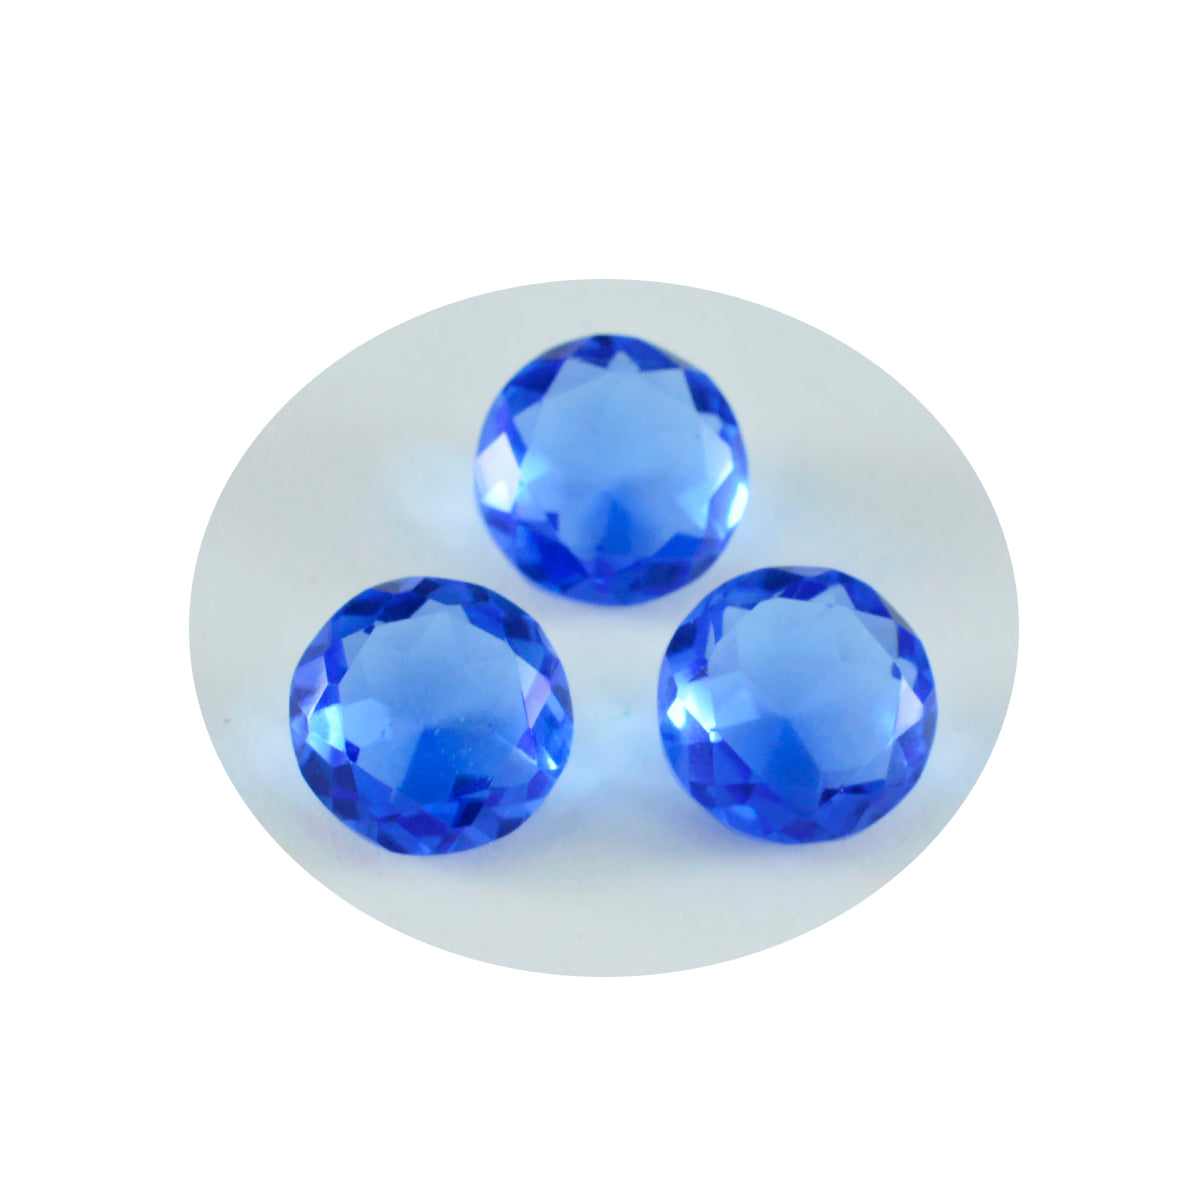 Riyogems 1PC Blue Sapphire CZ Faceted 11x11 mm Round Shape cute Quality Gem